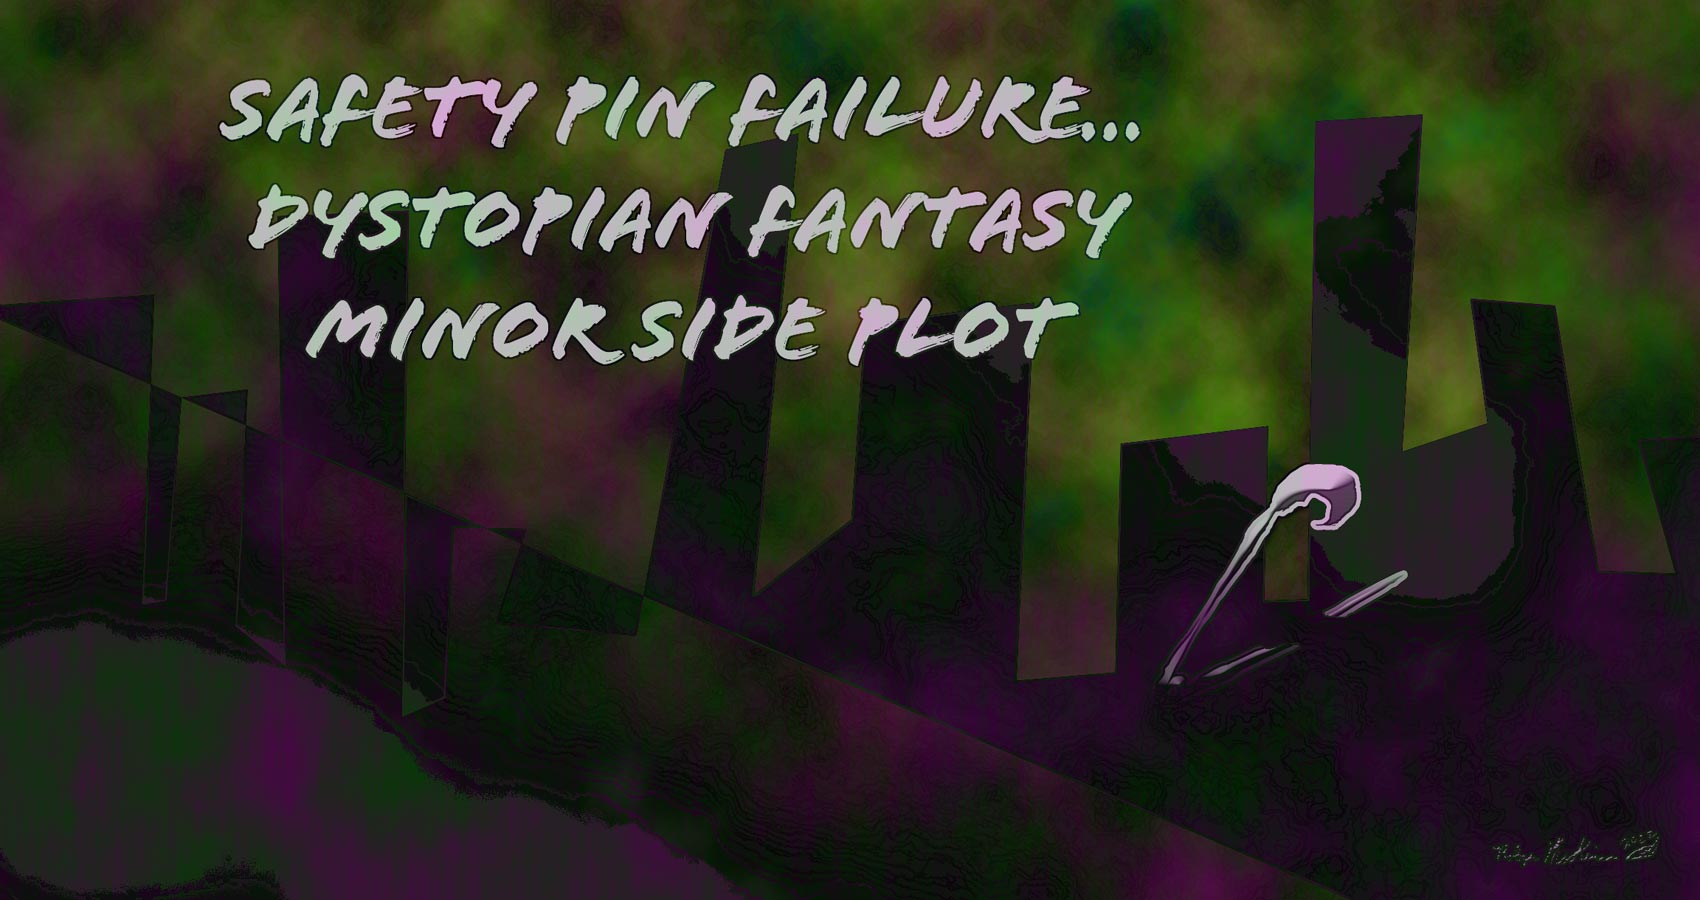 Dystopian Fantasy, haiku by Robyn MacKinnon at Spillwords.com